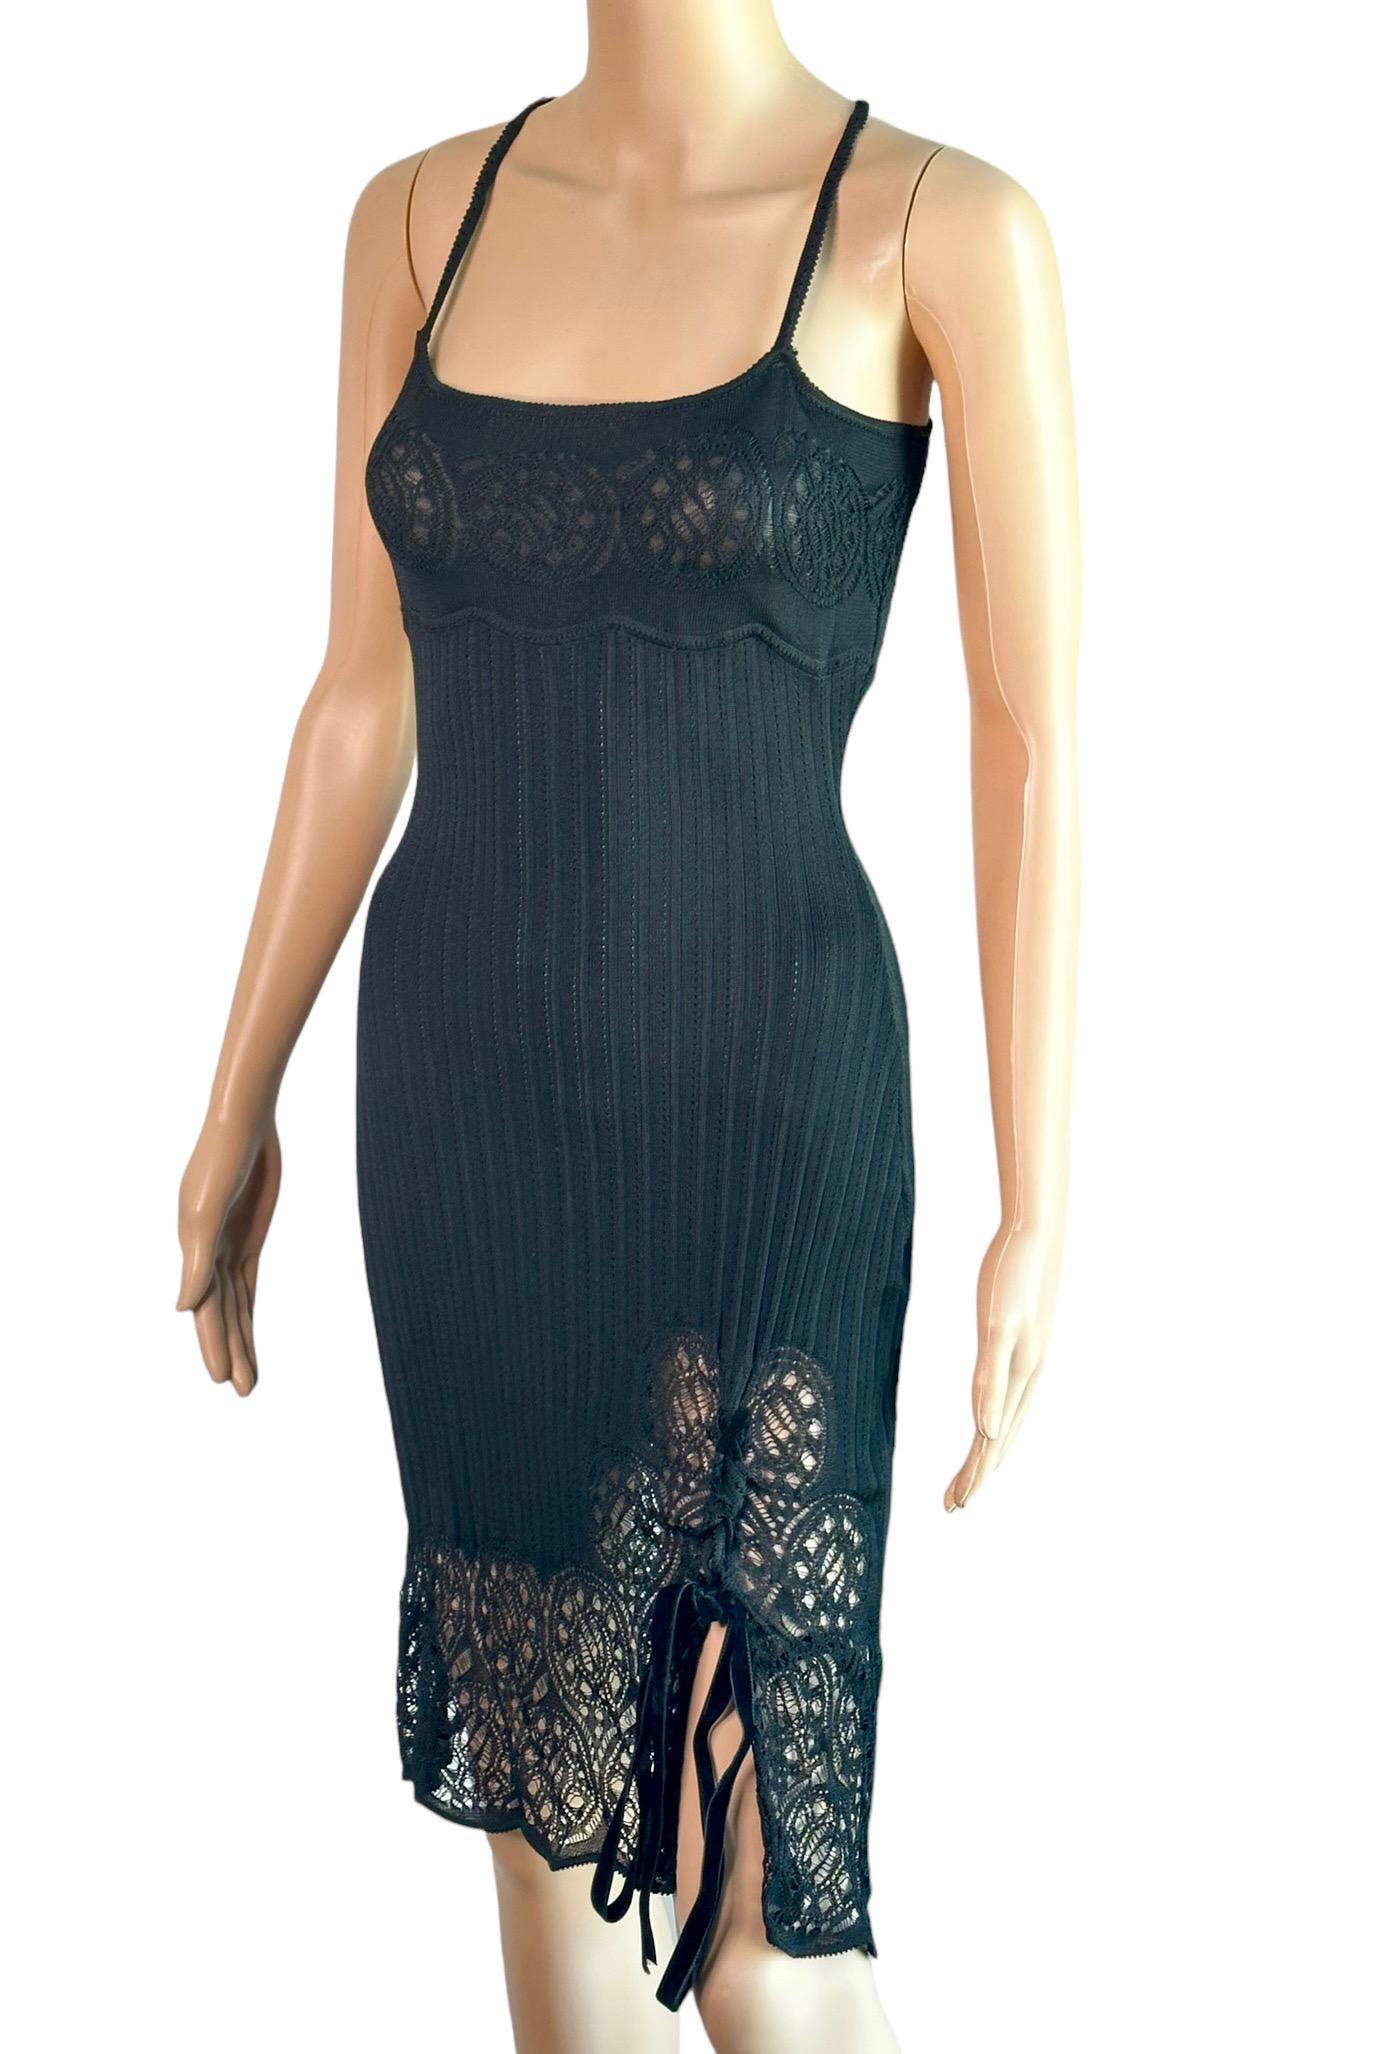 John Galliano S/S 1999 Sheer Lace Open Knit Black Mini Dress For Sale 5